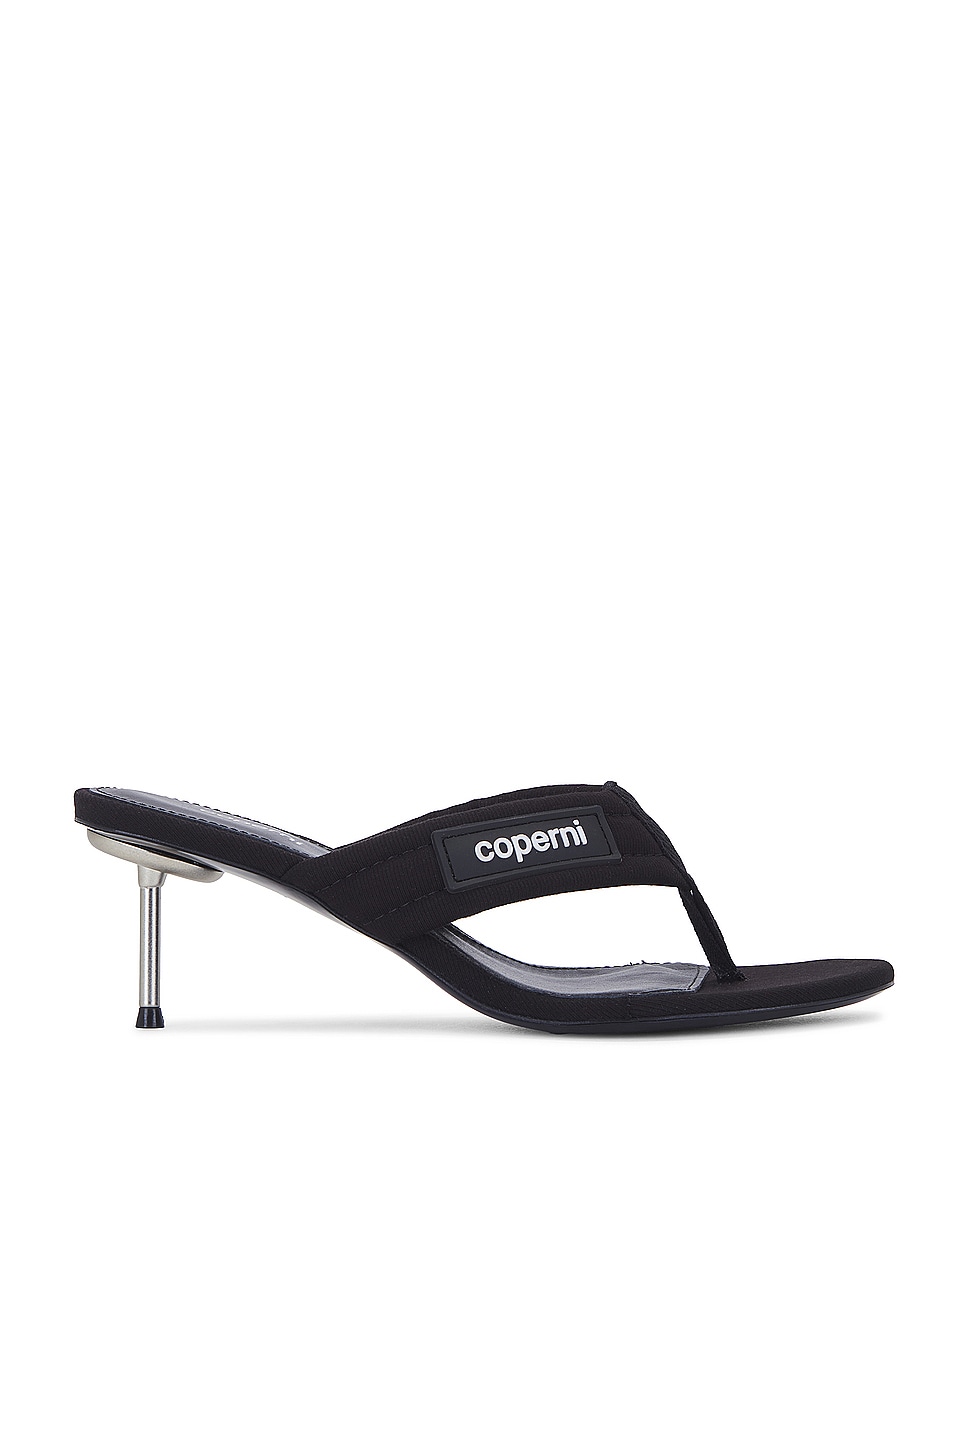 Image 1 of Coperni Branded Thong Sandal in Black